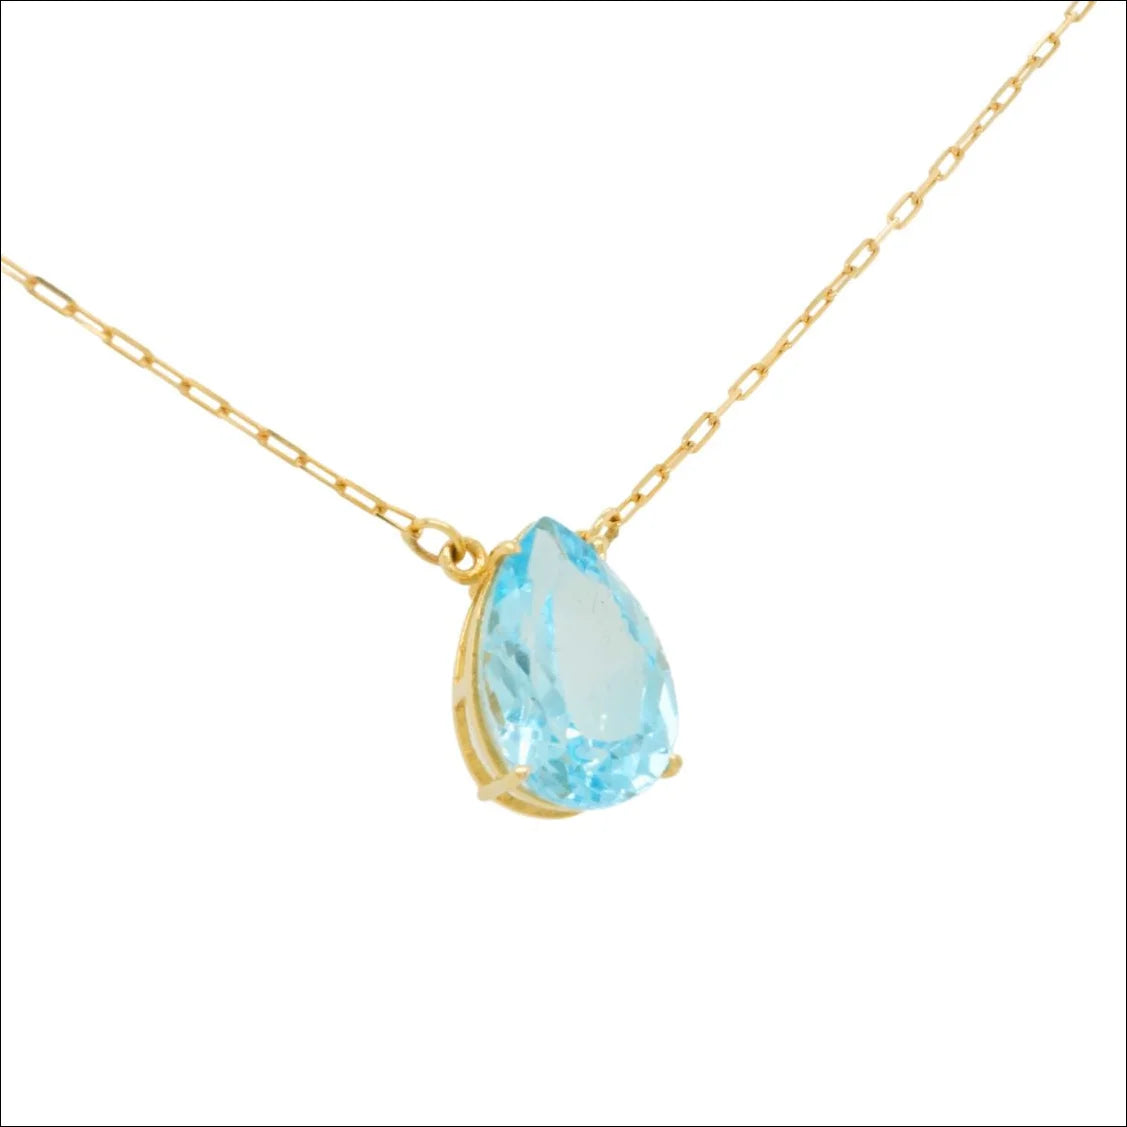 Radiant Blue Topaz 18 Carat Gold Necklace | Home page